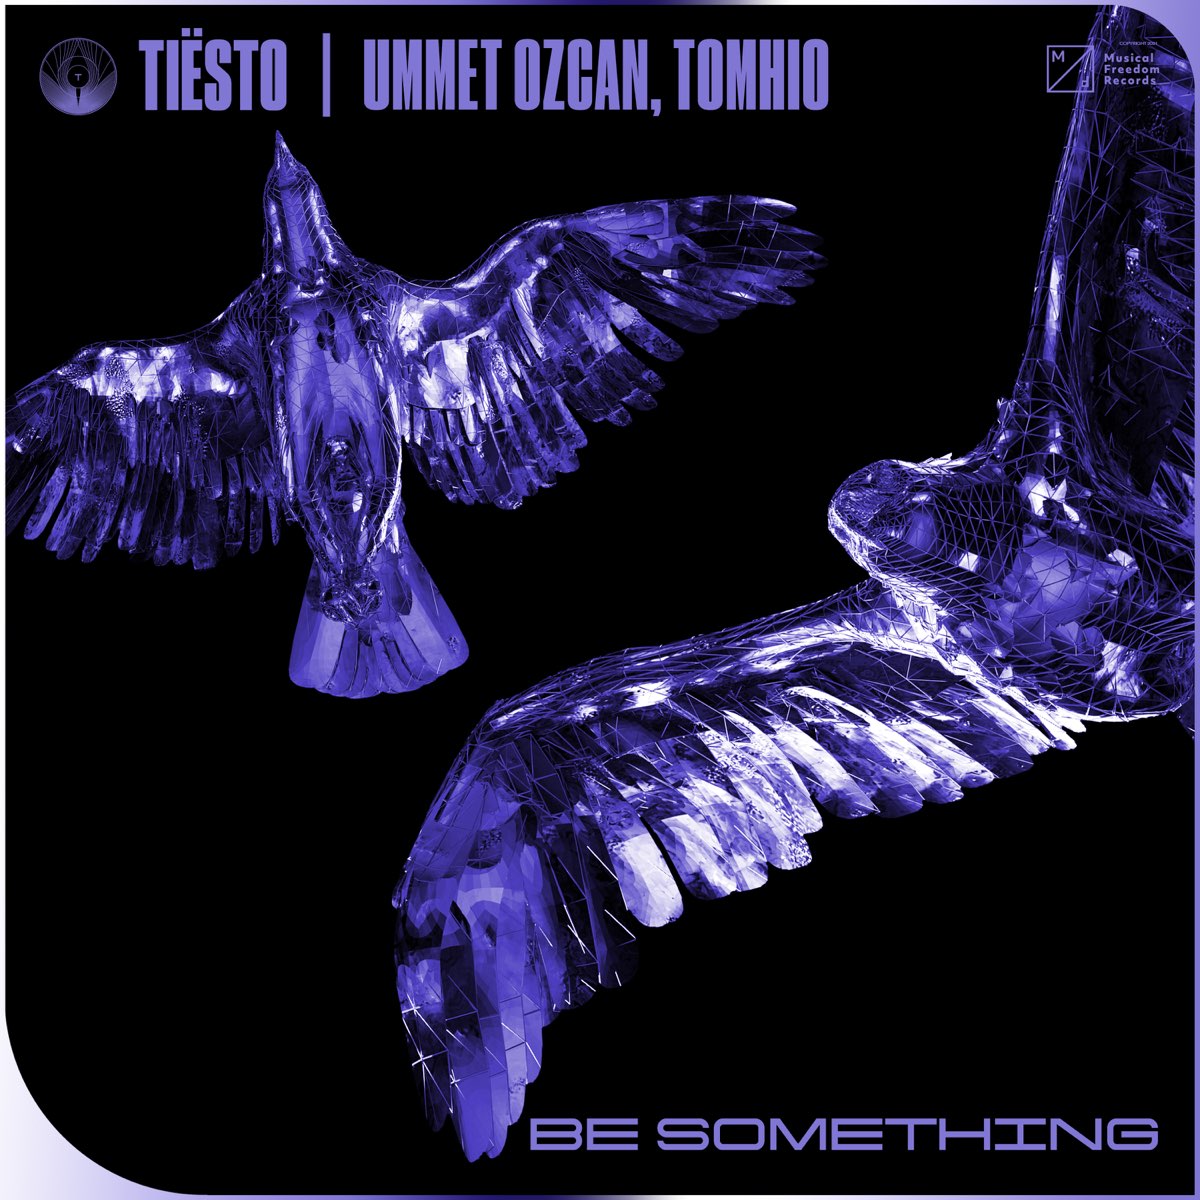 Tiësto, Ummet Ozcan, & Tomhio Be Something cover artwork